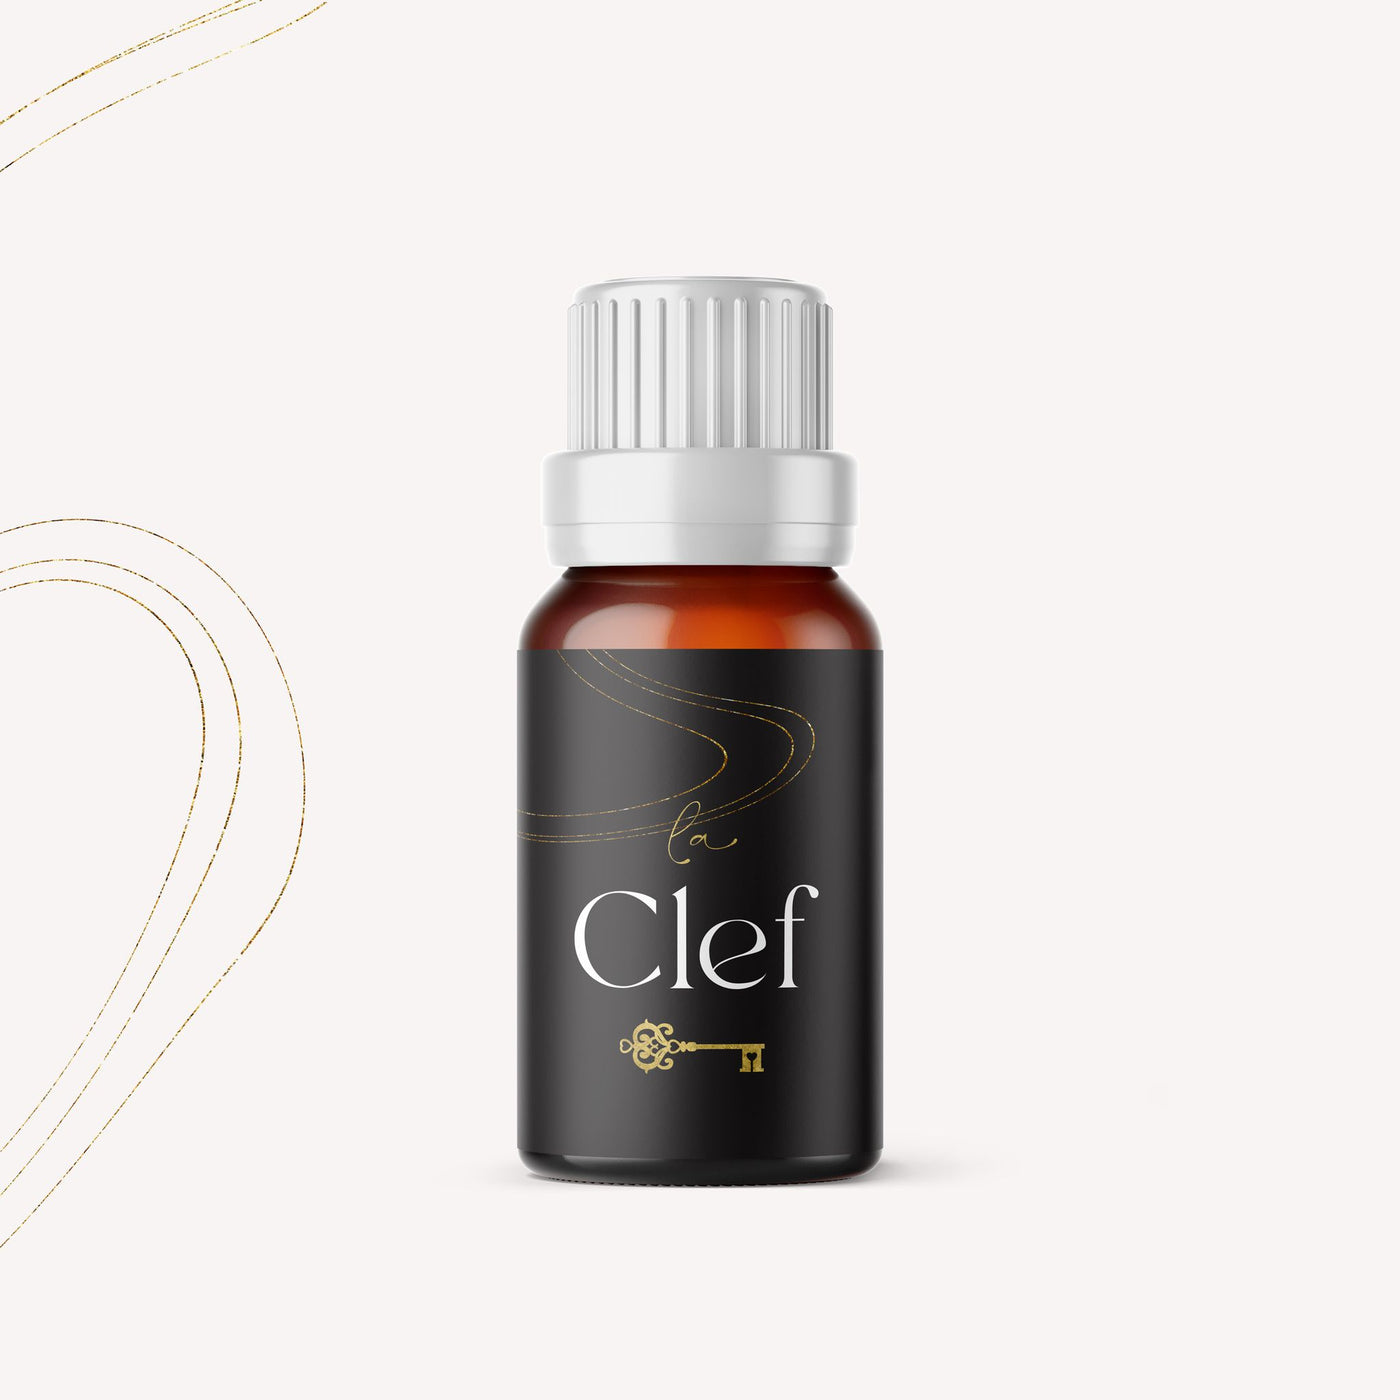 La Clef - Synergie aromatique 100% pure